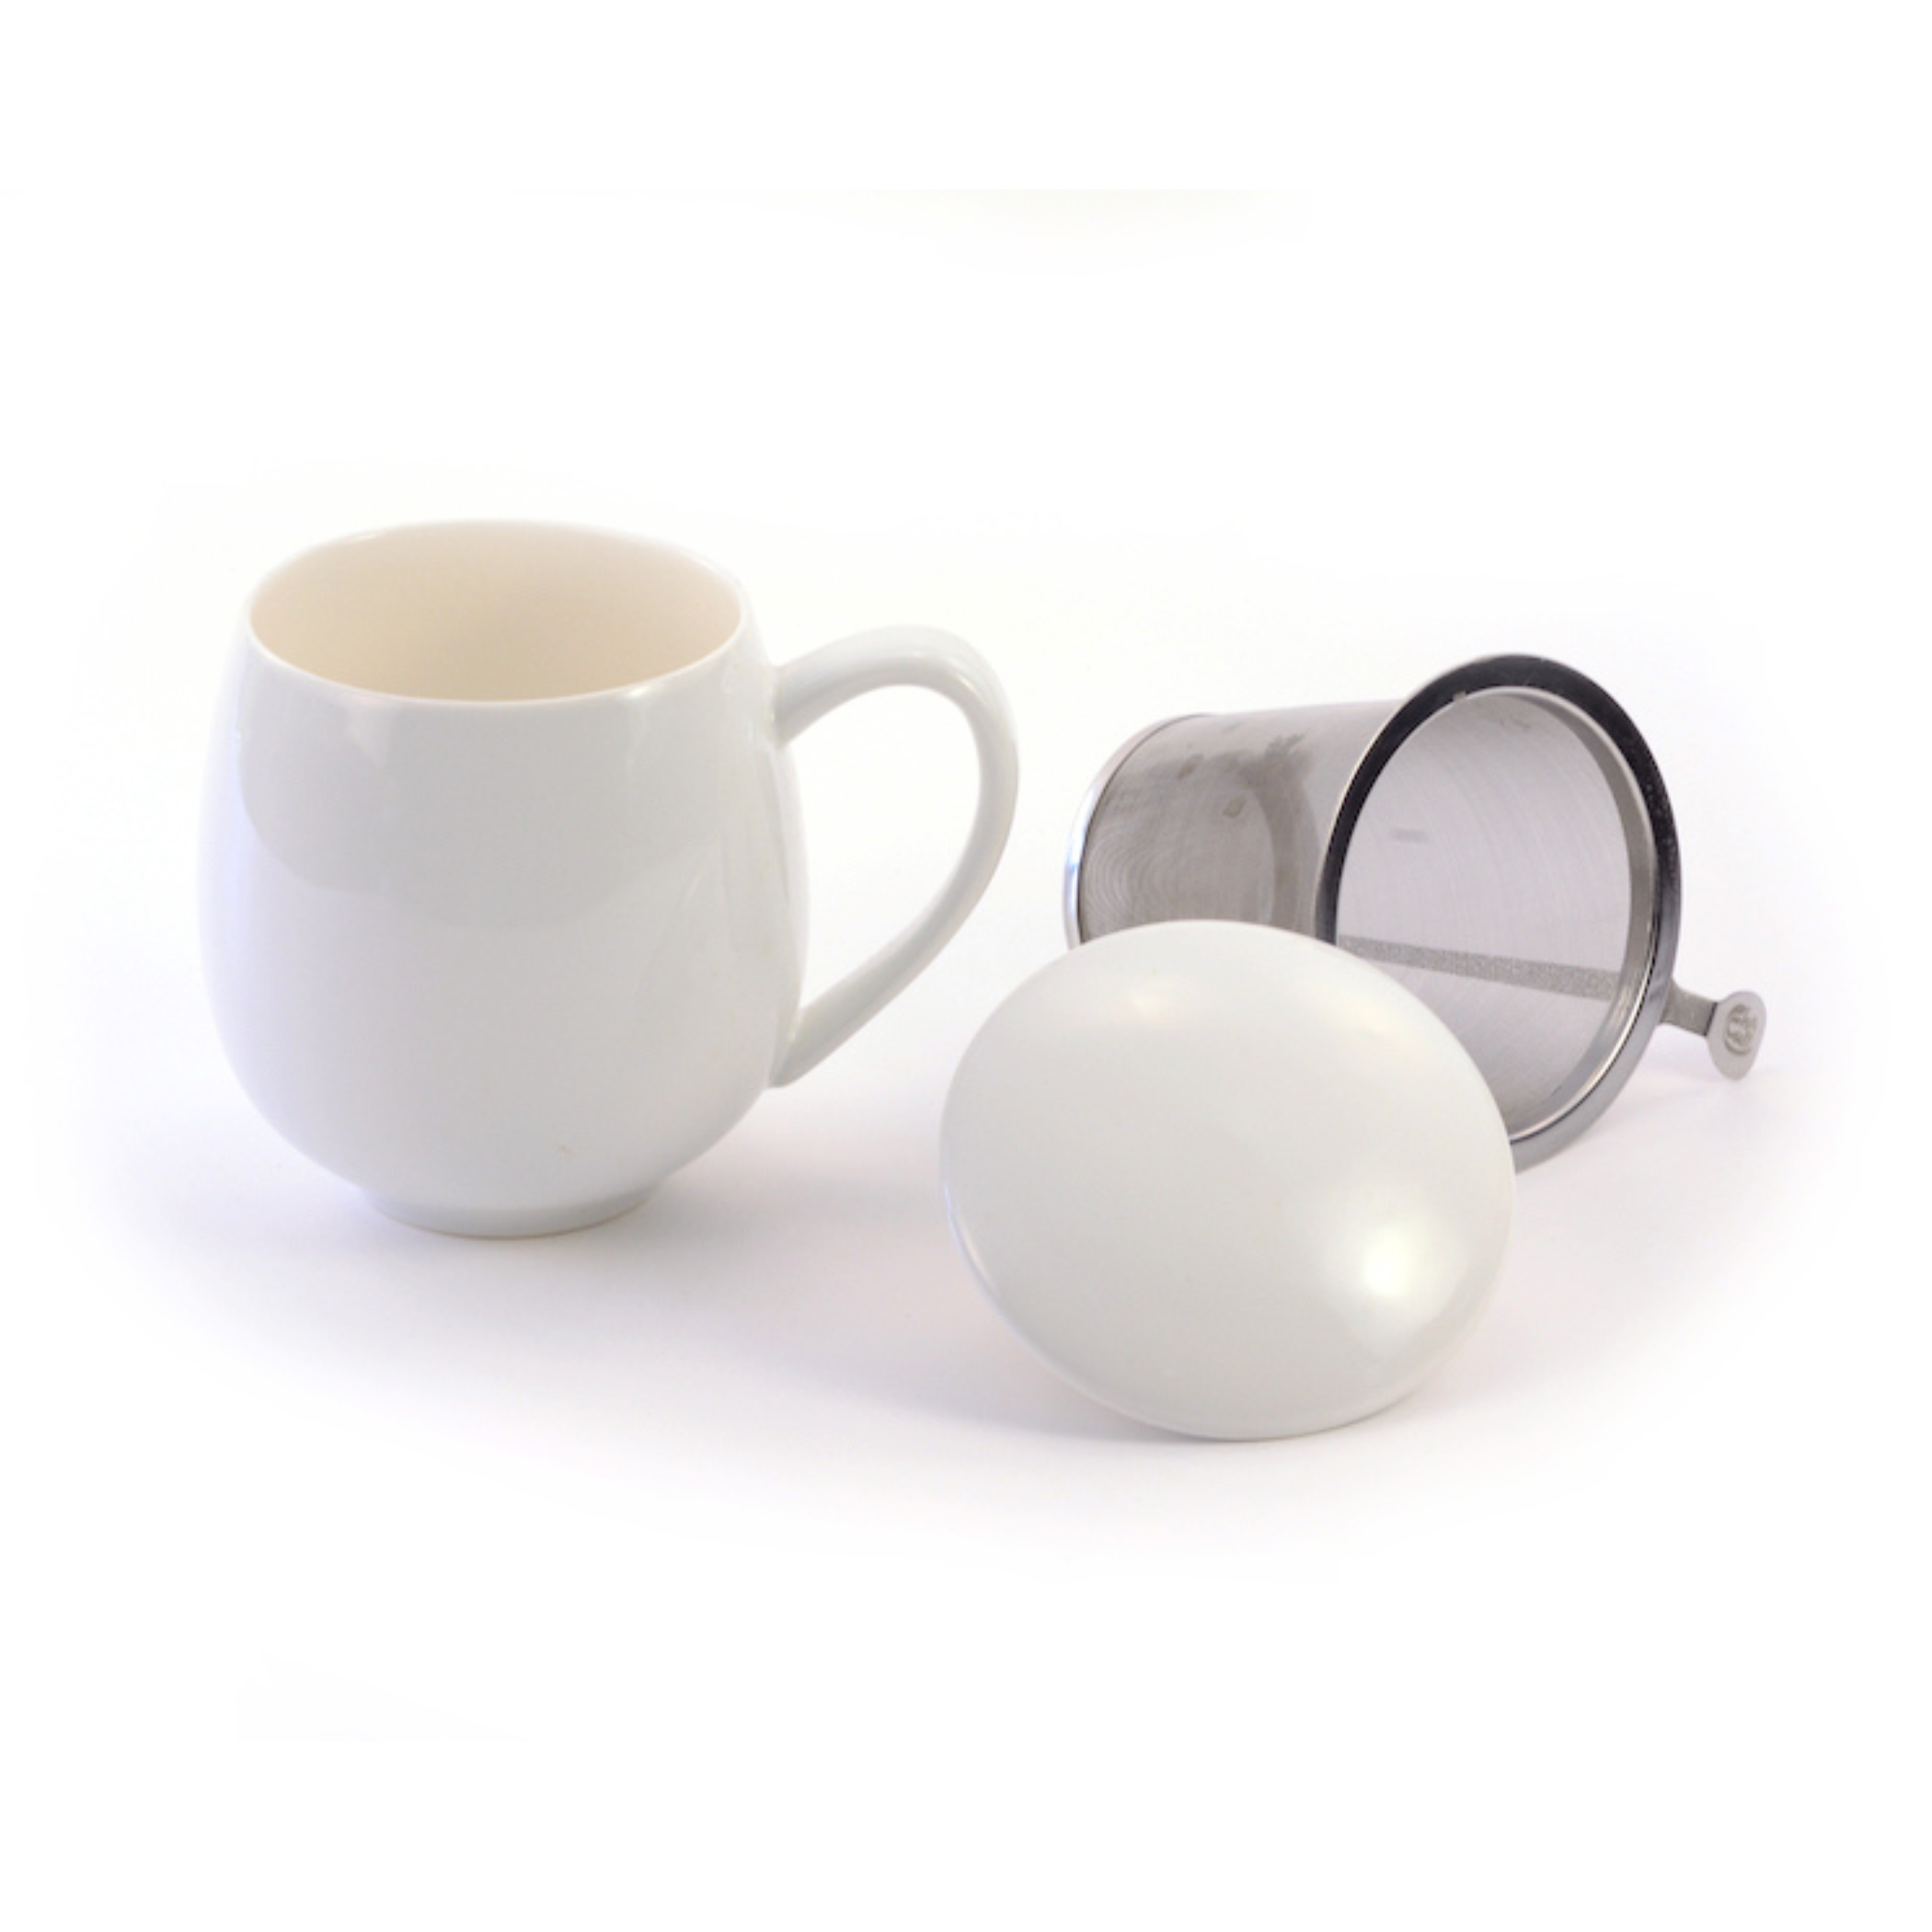 All-in-One Tea Mug - Snow